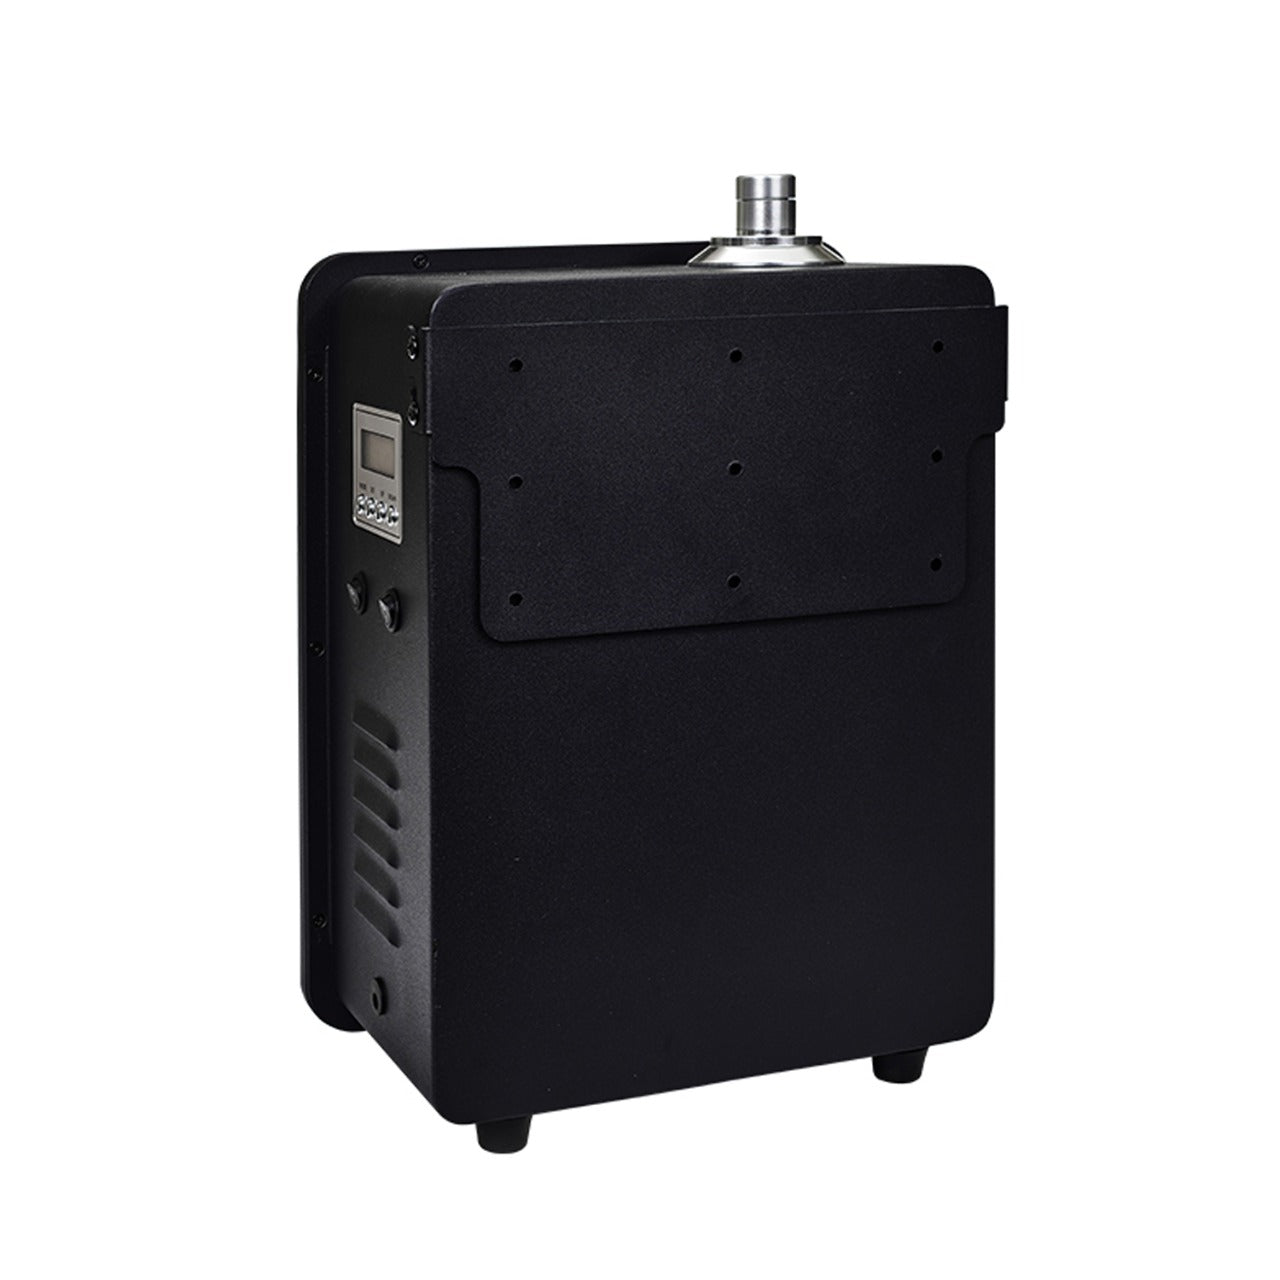 AromaticPro 102 HVAC - Black - Up to 3000 sq/ft